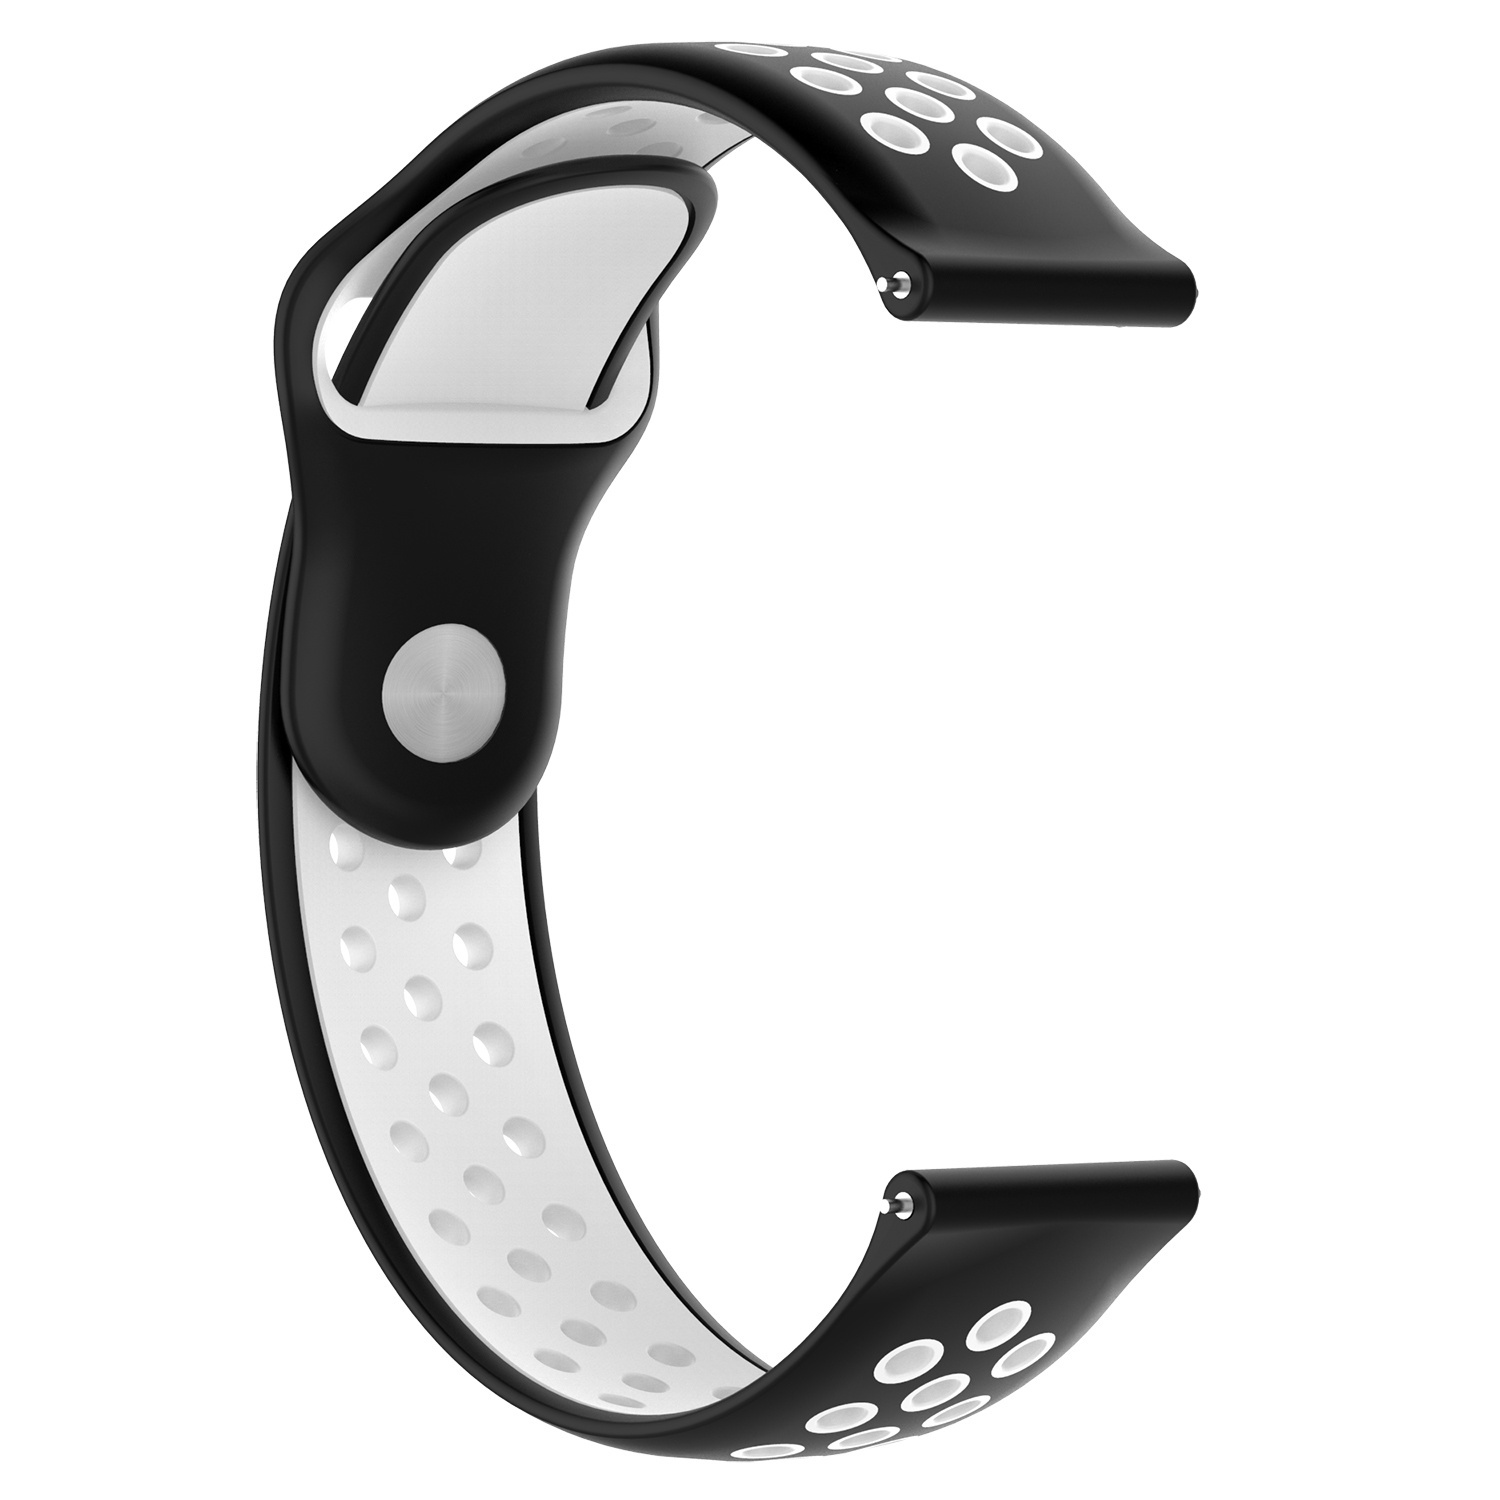 Cinturino doppio sport per Samsung Galaxy Watch - nero bianco